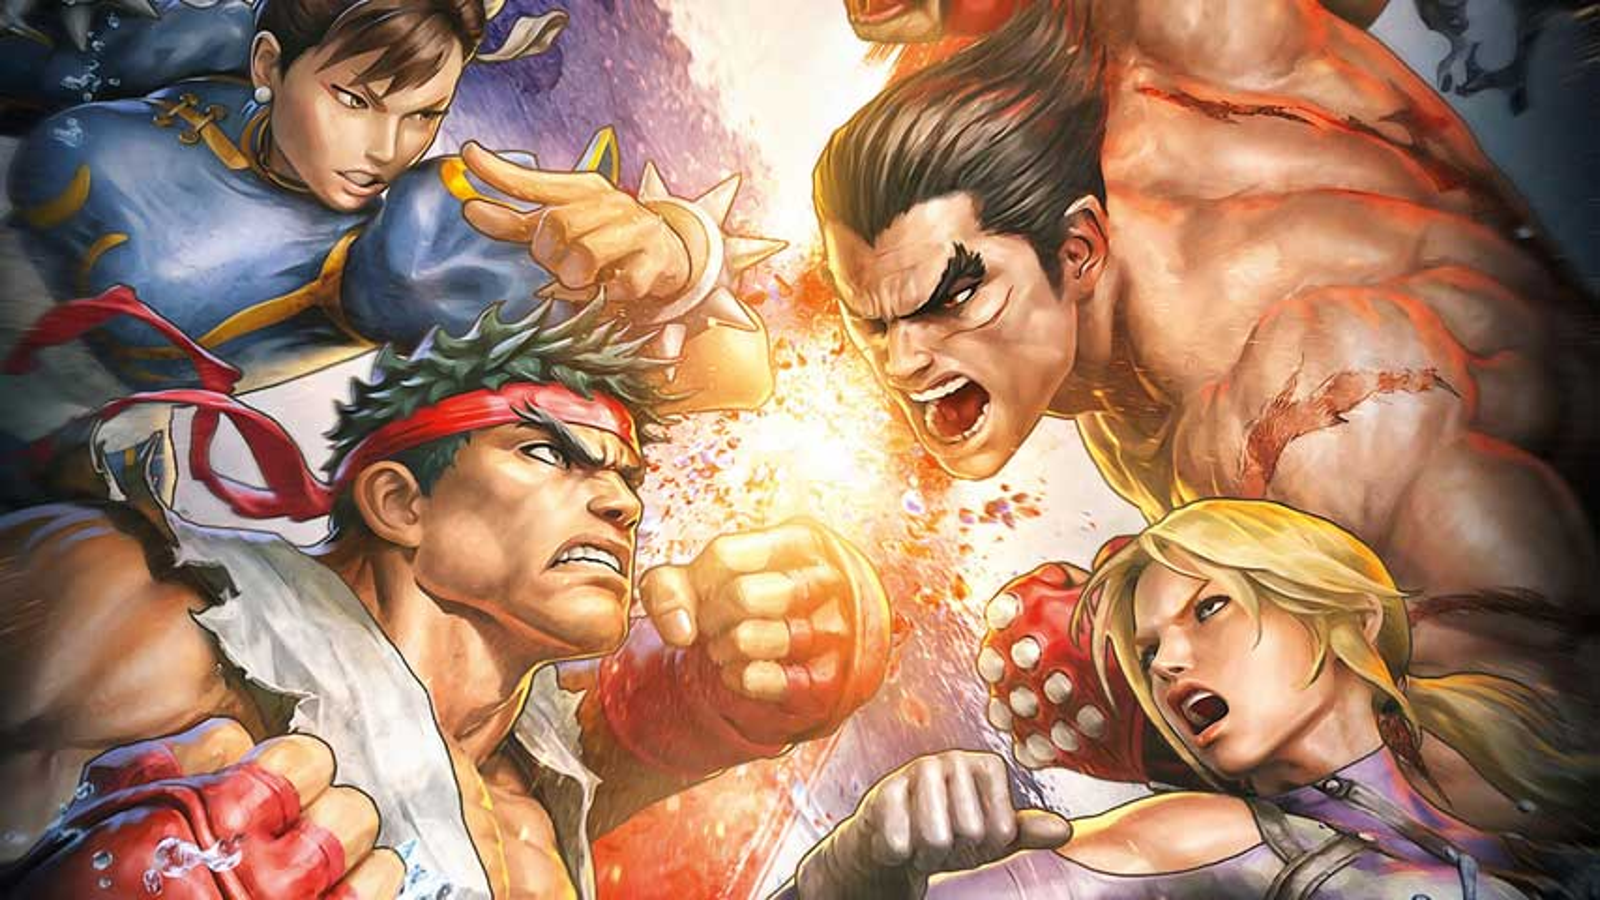 Back & Better? - Street Fighter X Tekken 2013 Review